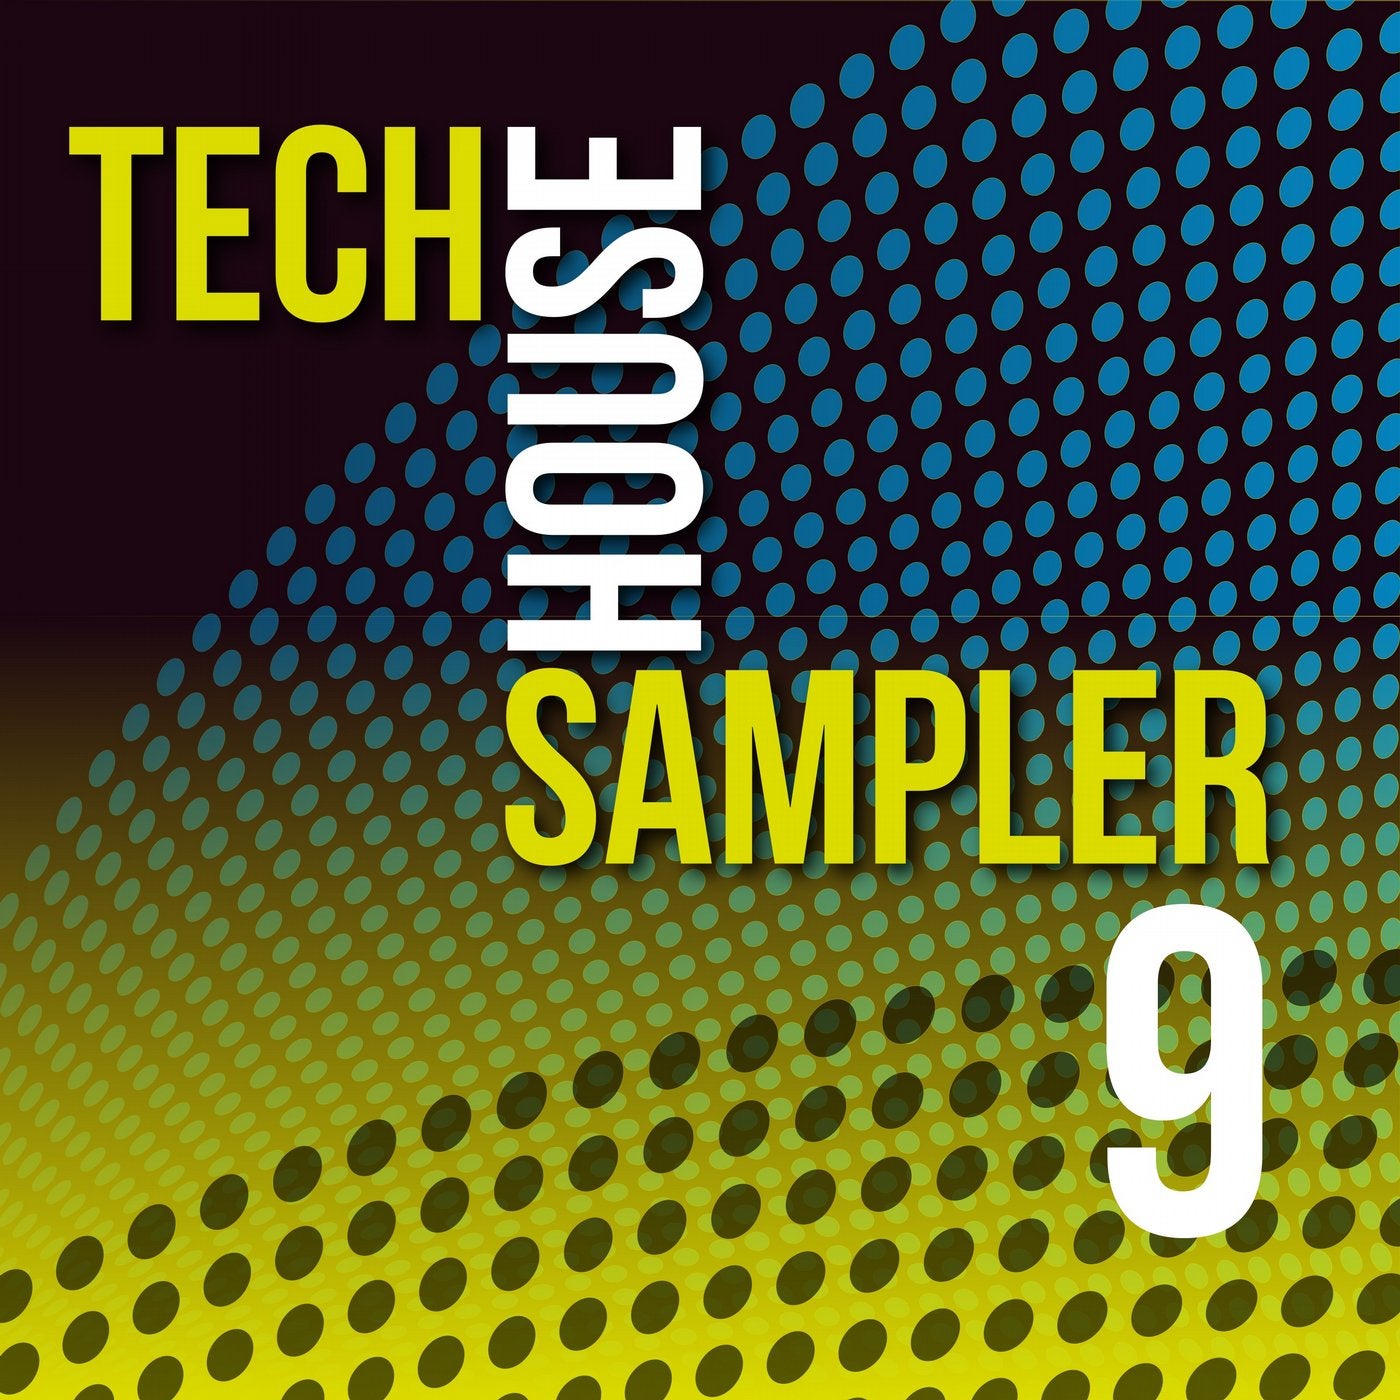 Tech House Sampler, Vol. 9